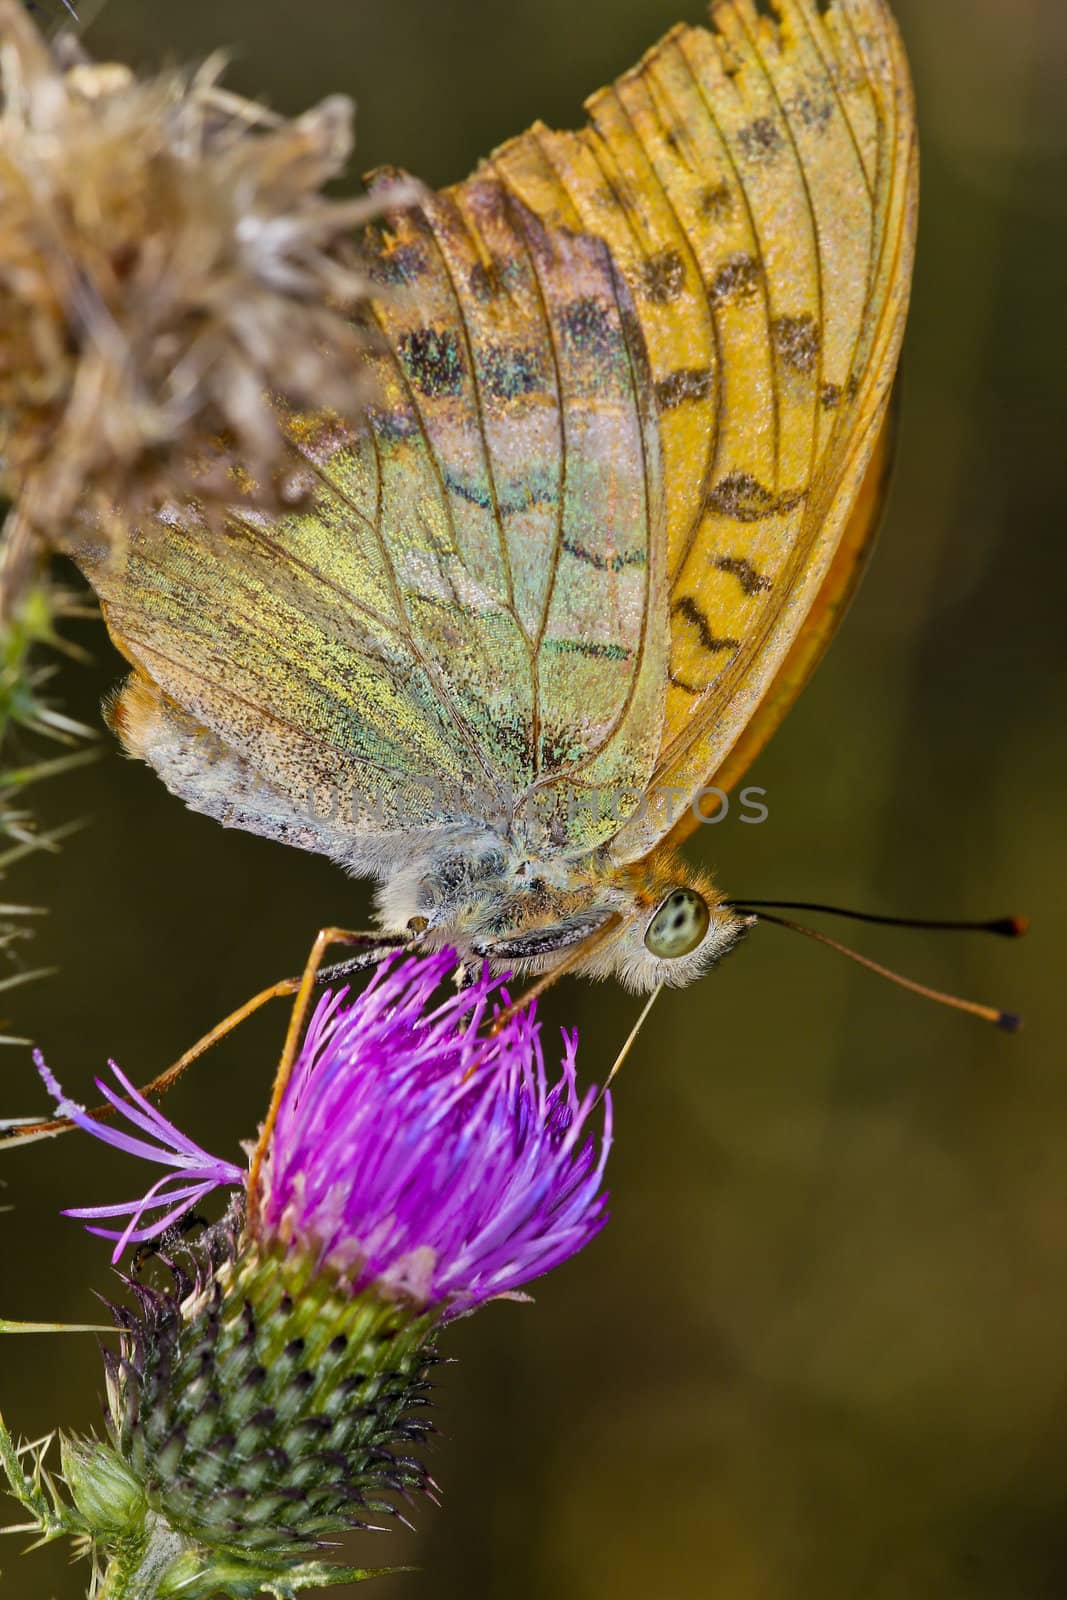 Butterfly on flower by chuckyq1